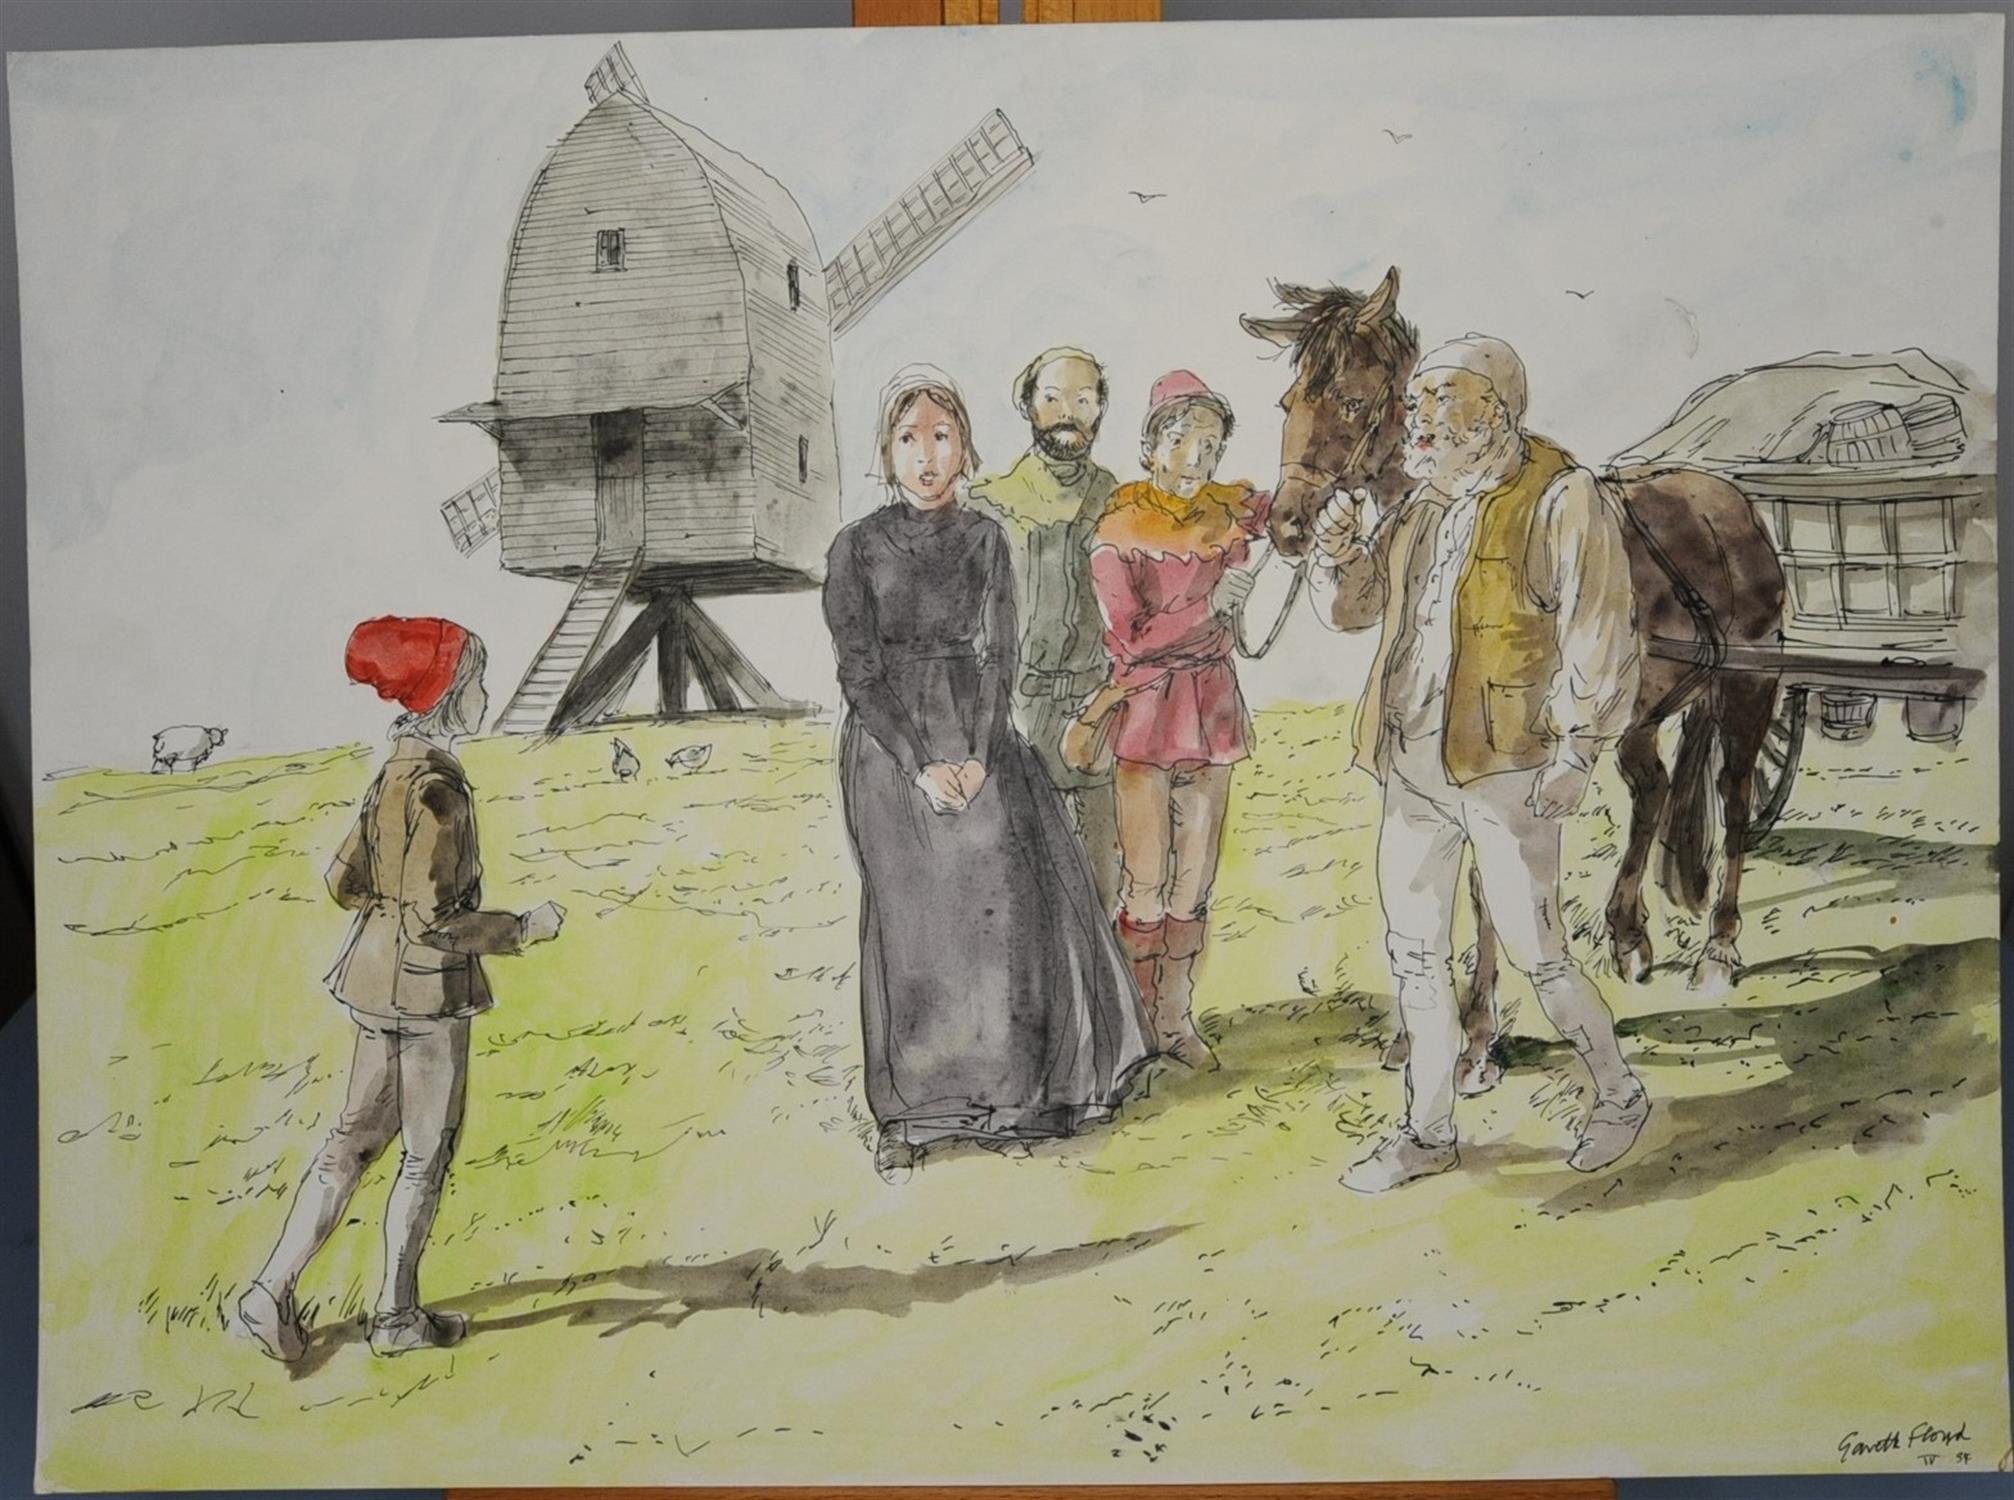 Jackanory, The Historic Windmill, Gareth Floyd (b.1940) Twelve original hand drawn illustrations